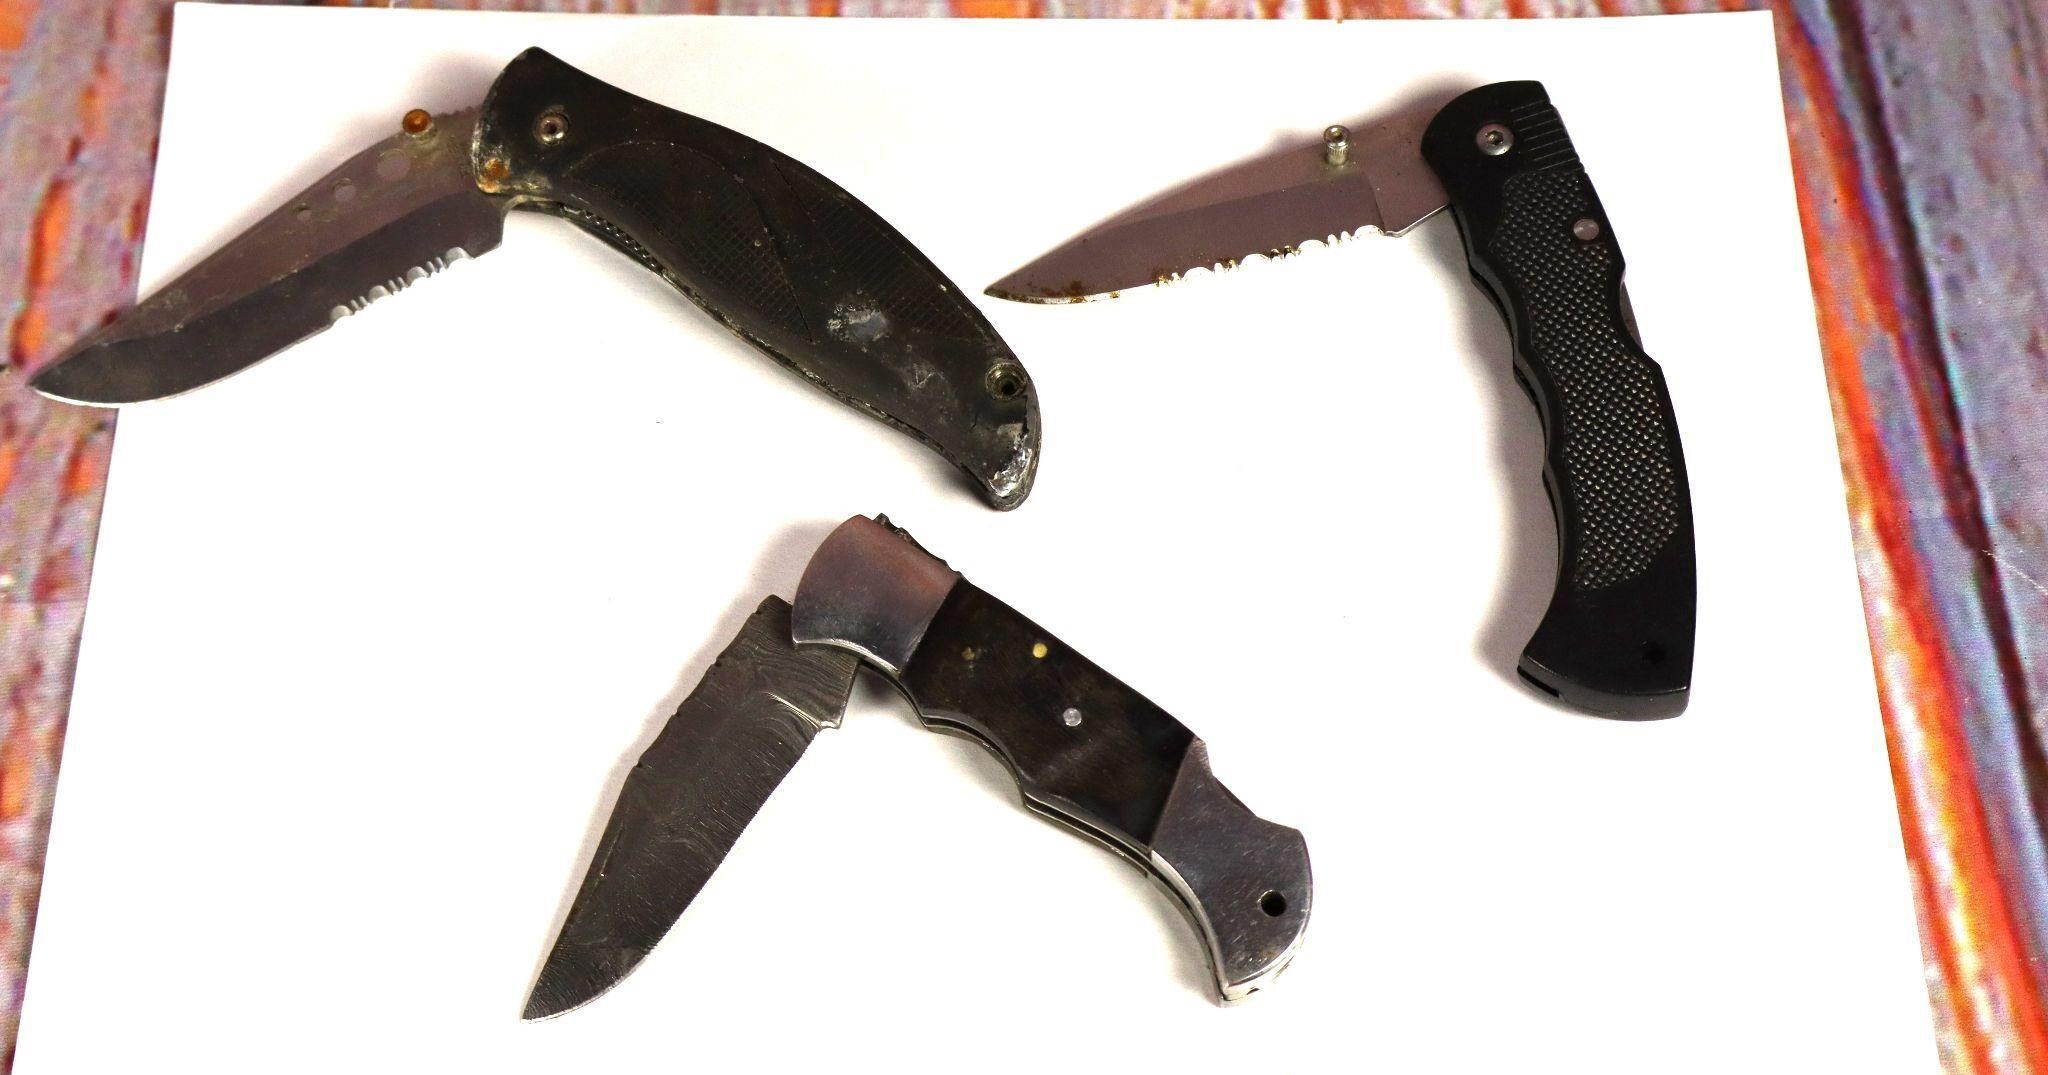 3 pocket knives knife lot one Damascus blade